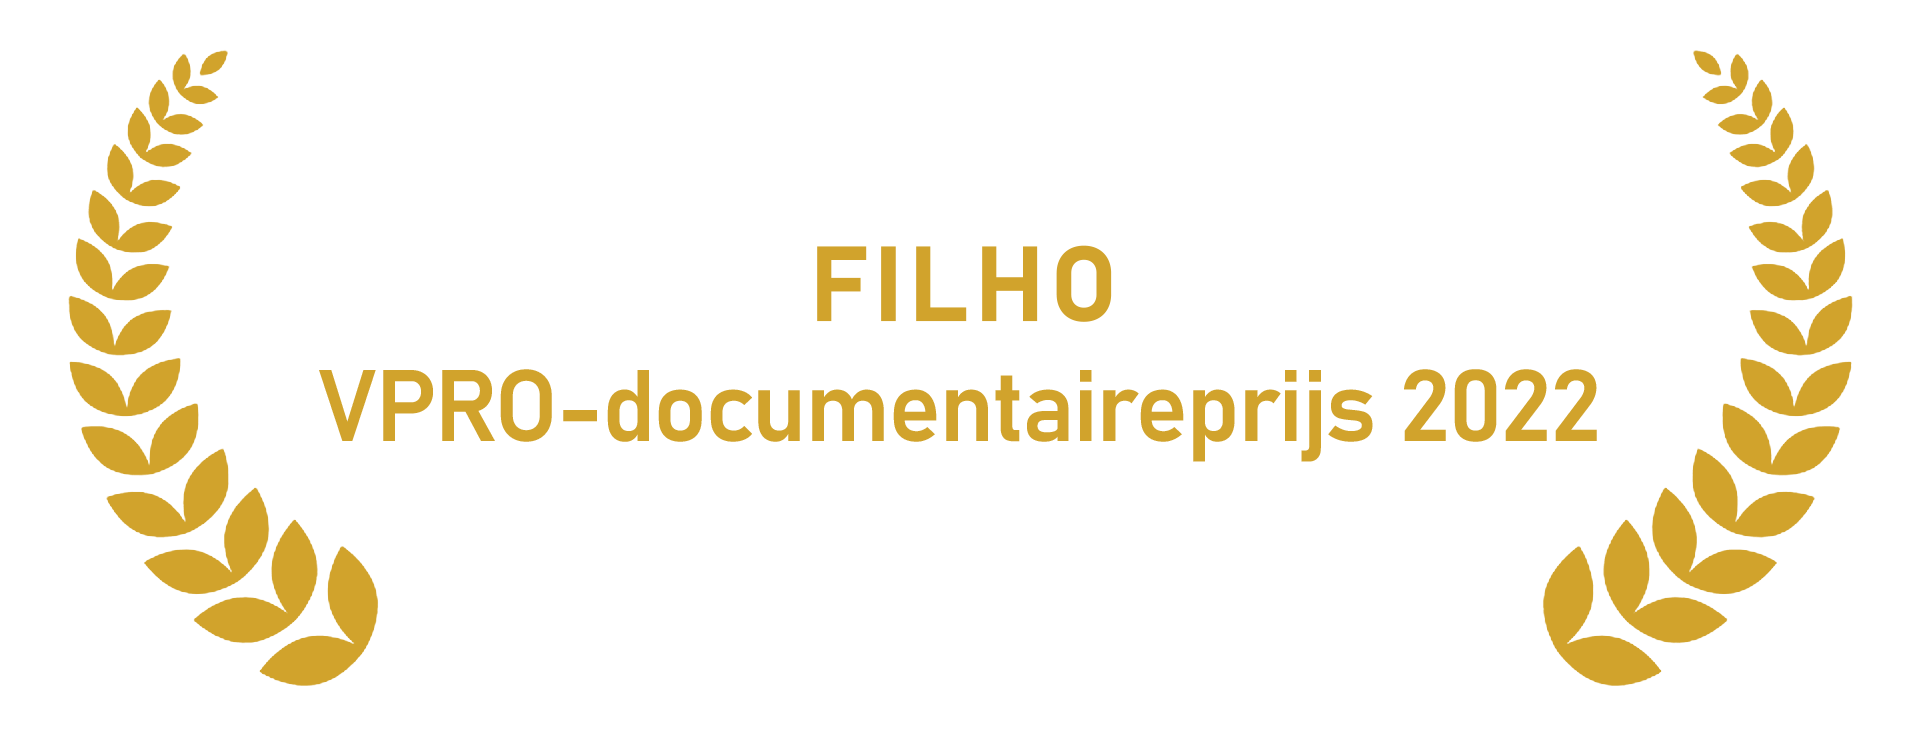 Filho VPRO Documentaireprijs 2022